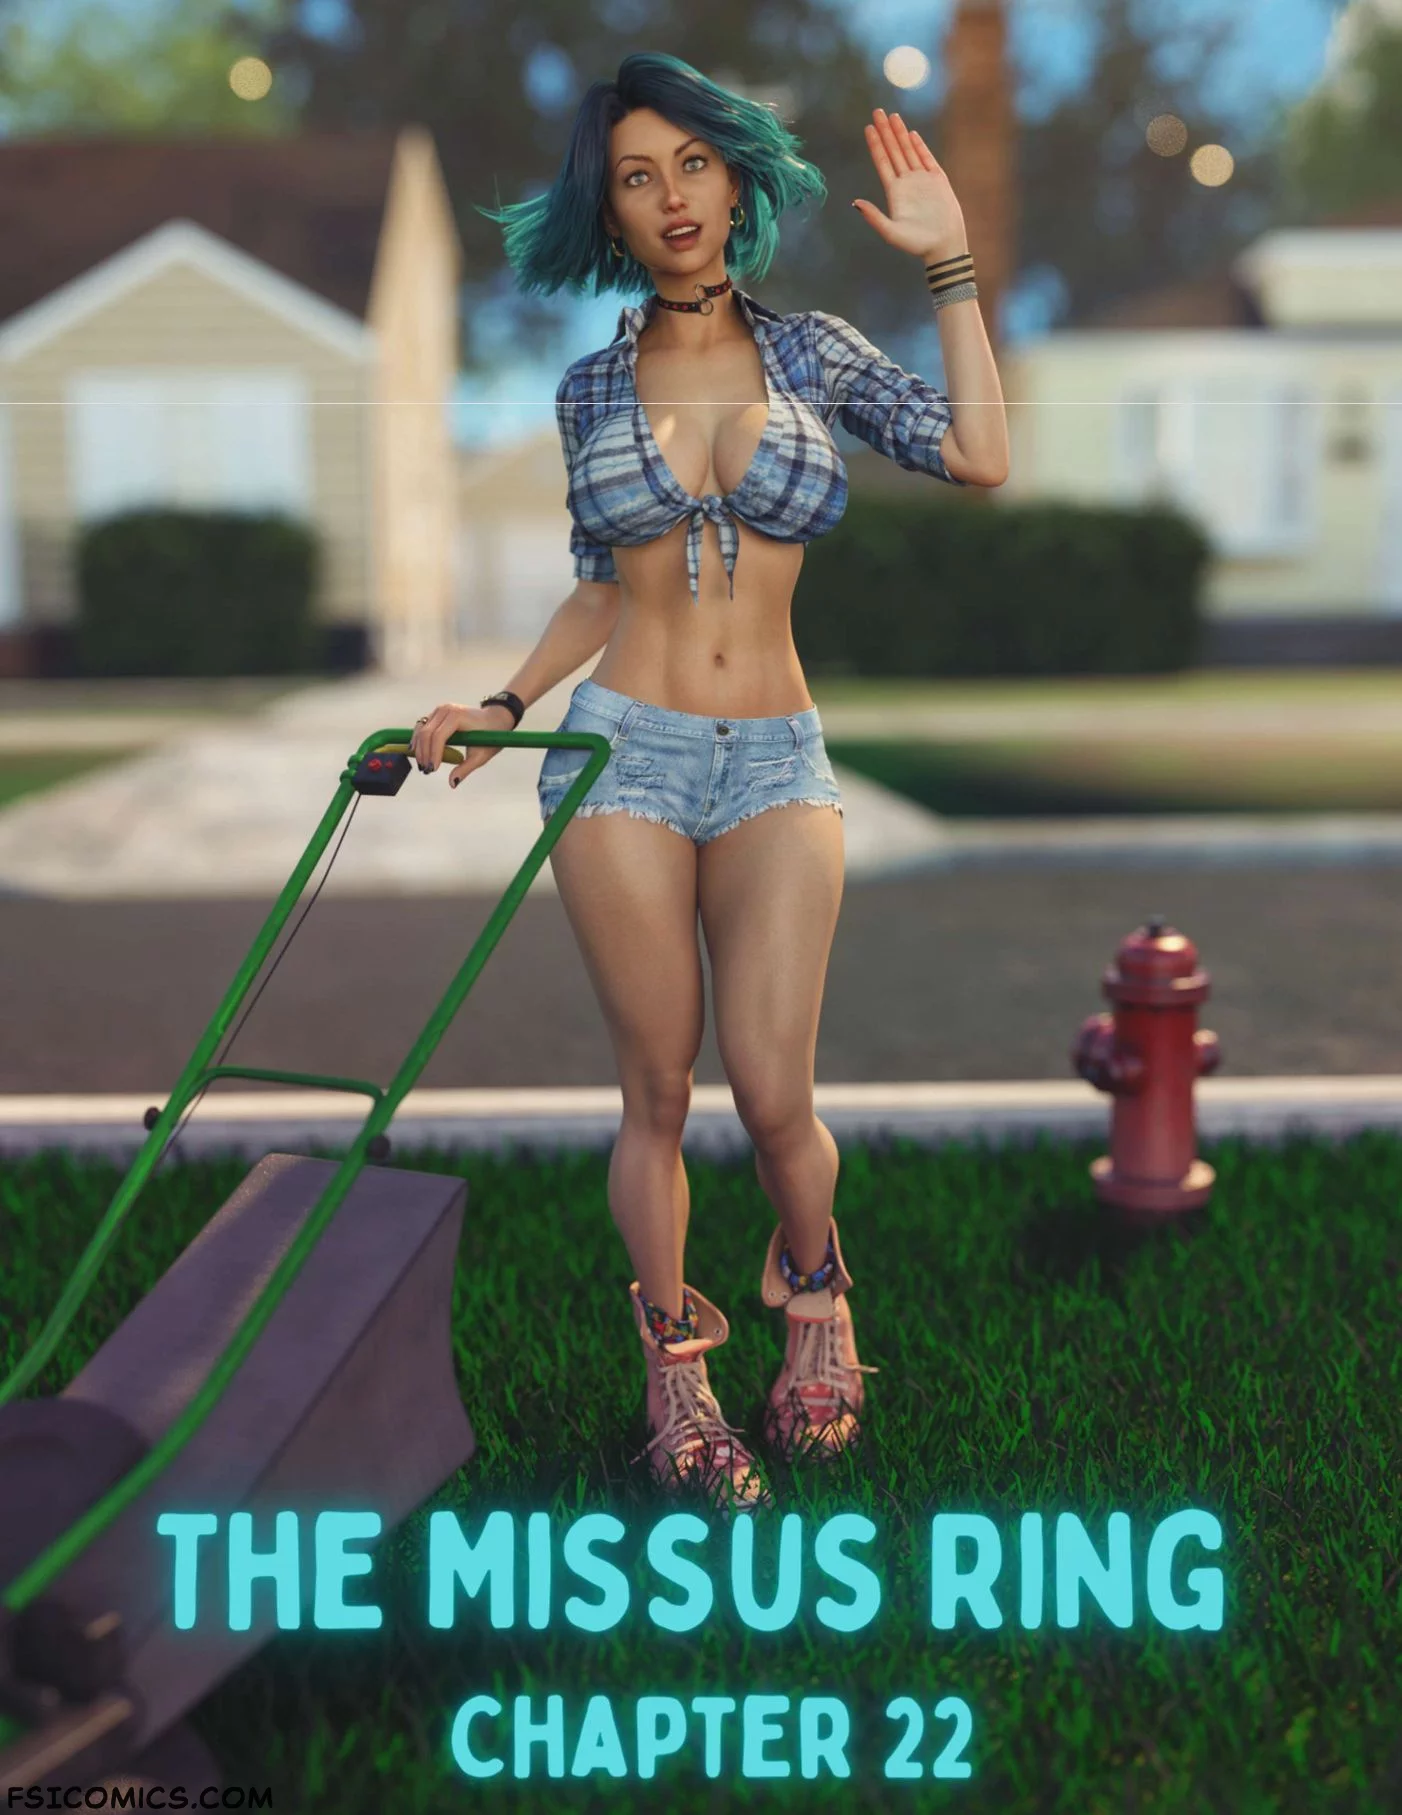 The Missus Ring Chapter 22 - Lexx228 | RawlyRawls - 73 - FSIComics